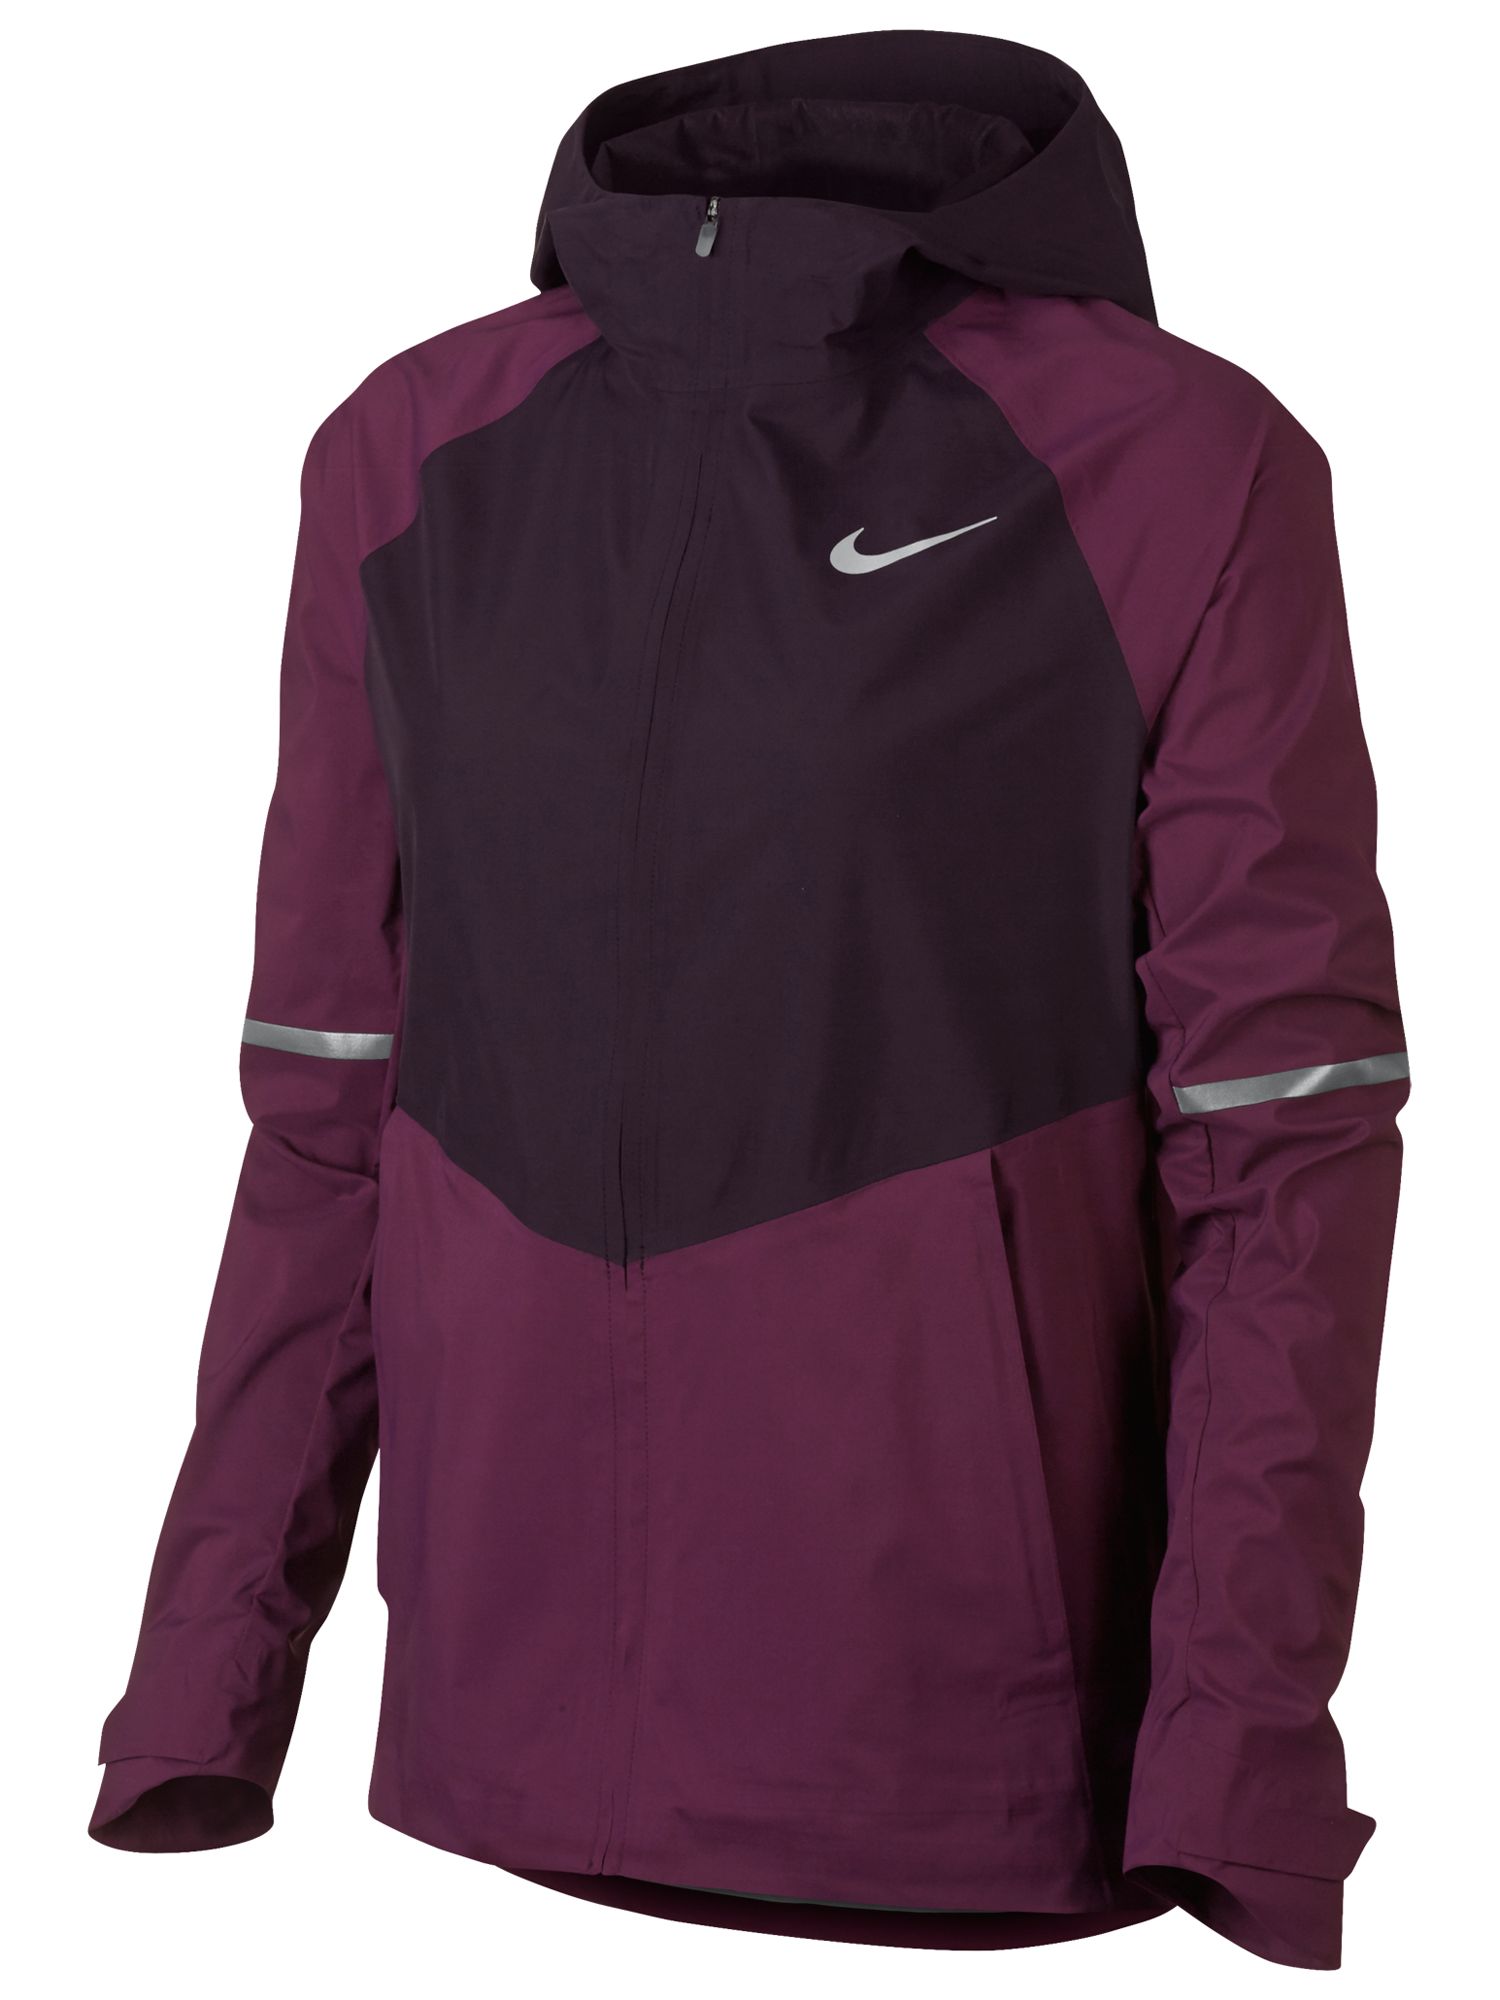 Nike Zonal AeroShield Hooded Running Jacket, Bordeaux/Port Wine ...